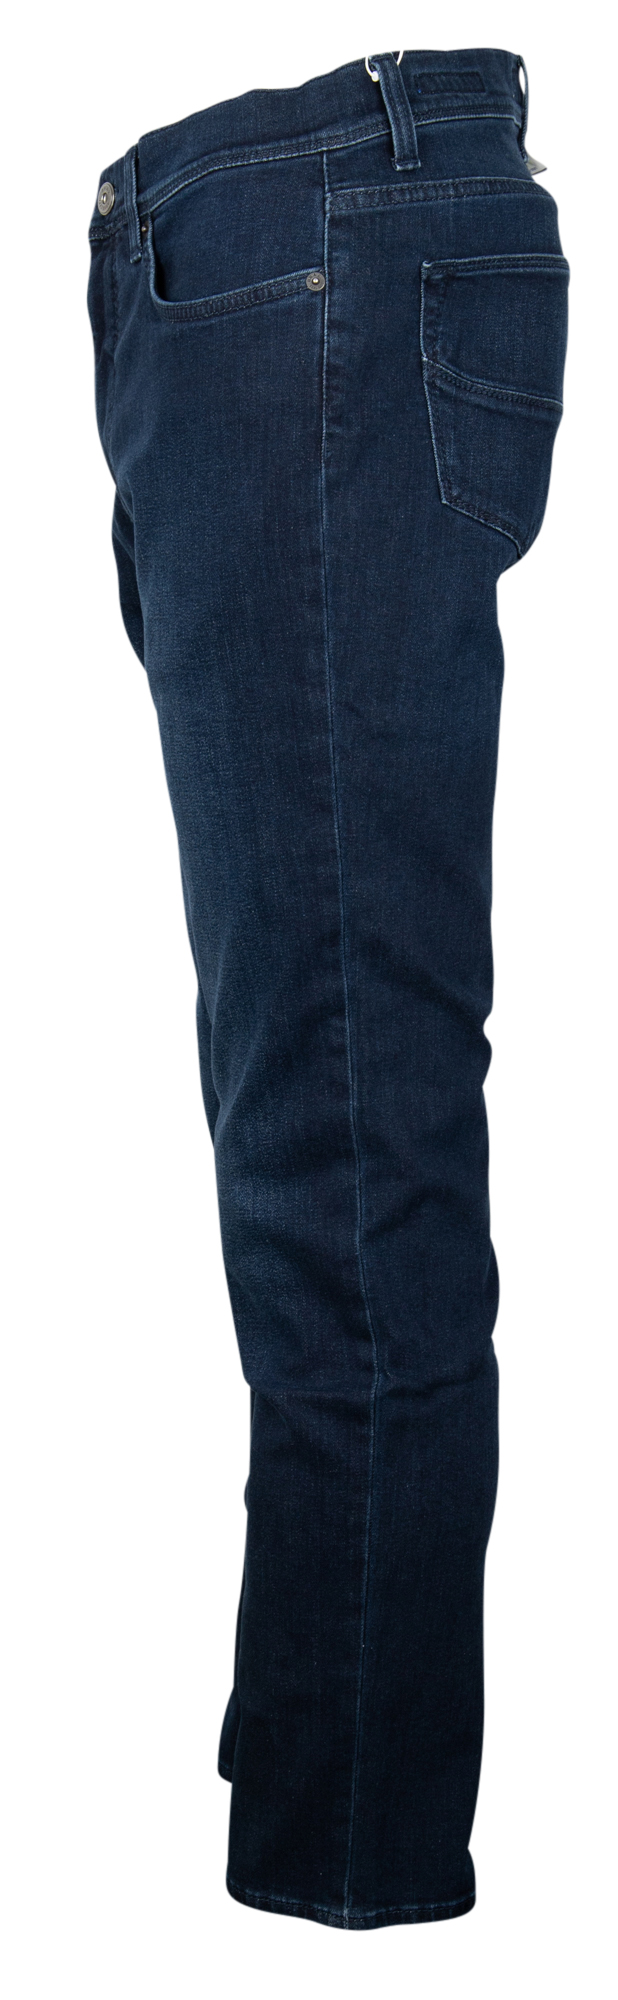 jeans-cadiz-dark-blue-used